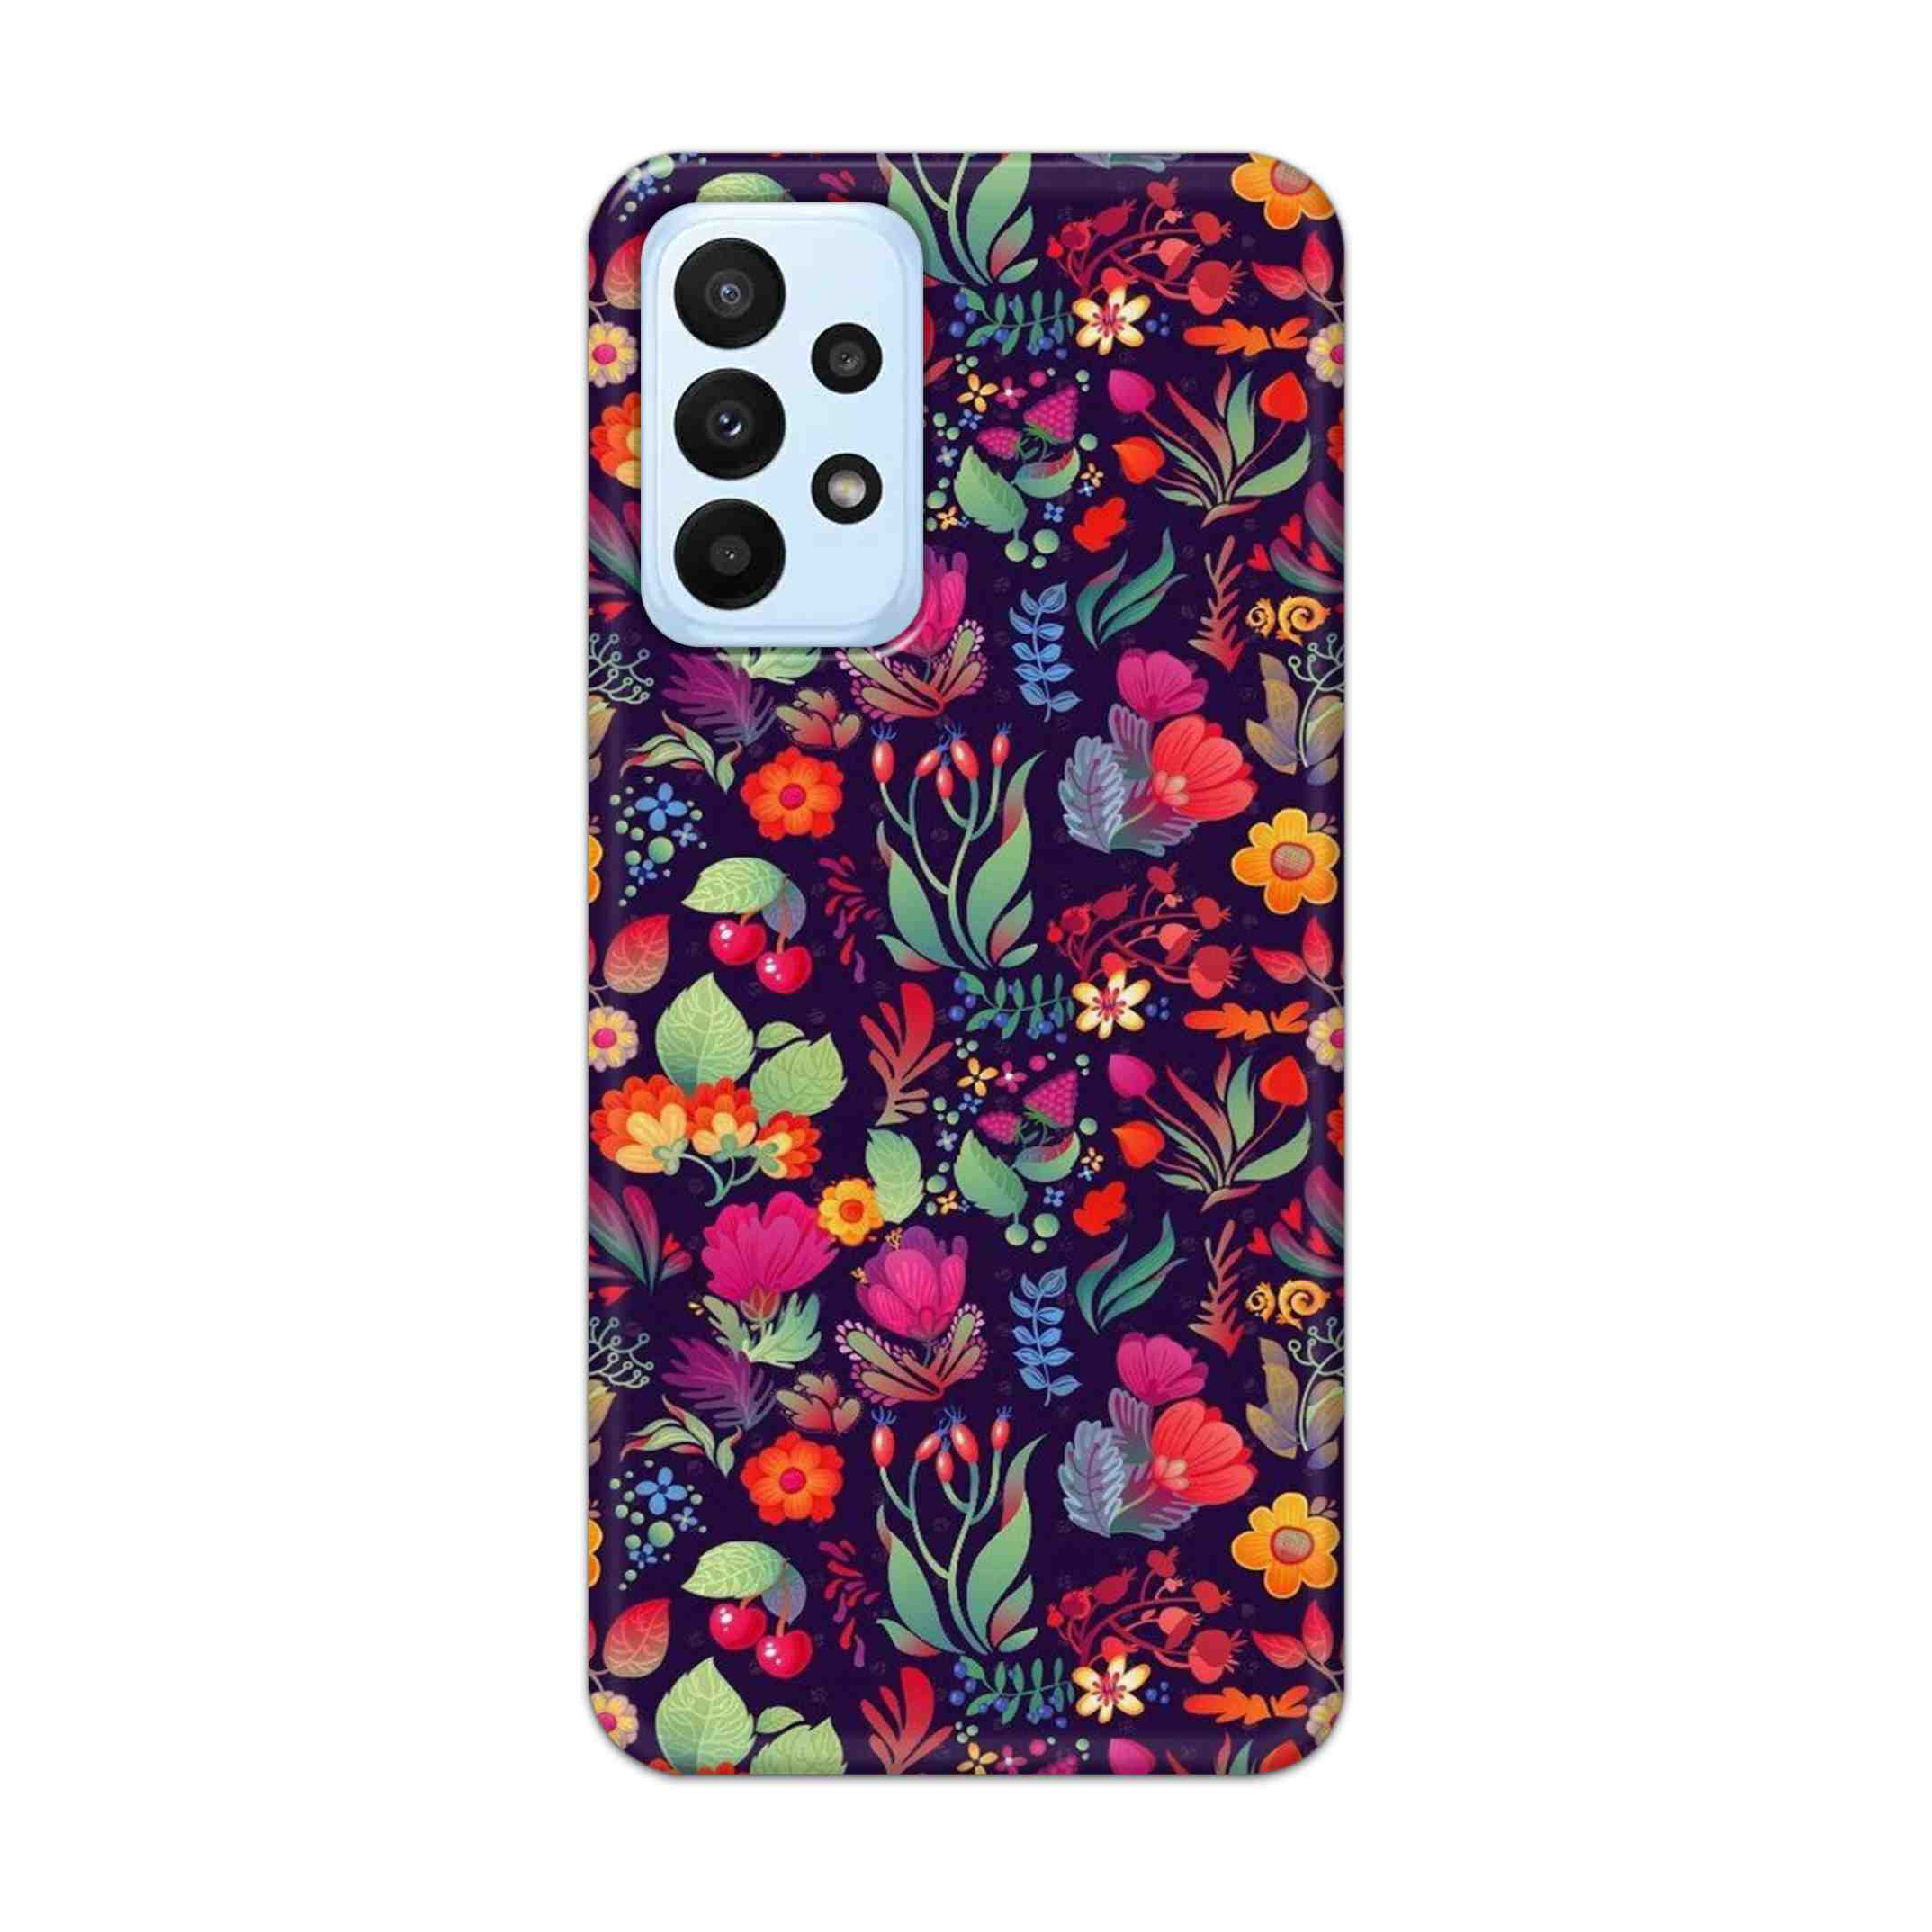 Buy Fruits Flower Hard Back Mobile Phone Case Cover For Samsung A23 Online